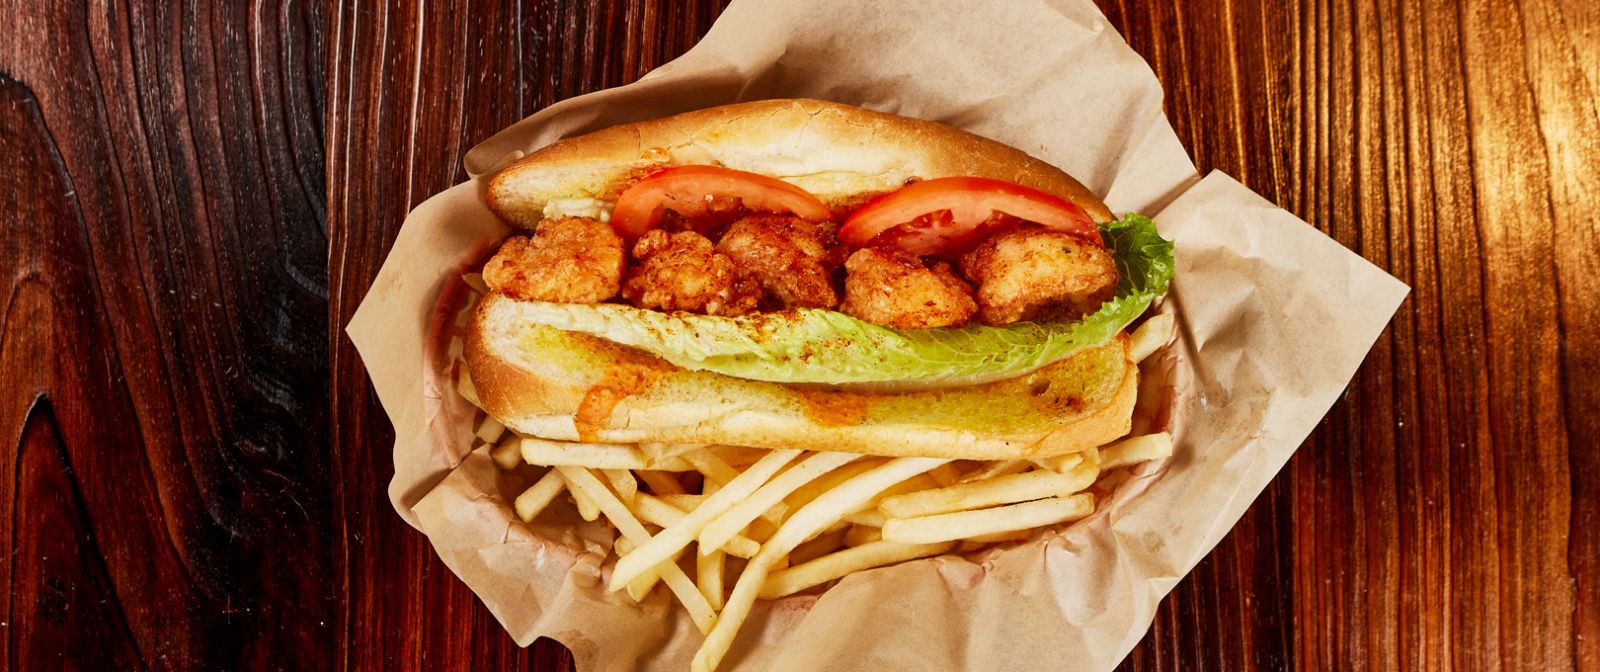 Fried shrimp sandwich with fries